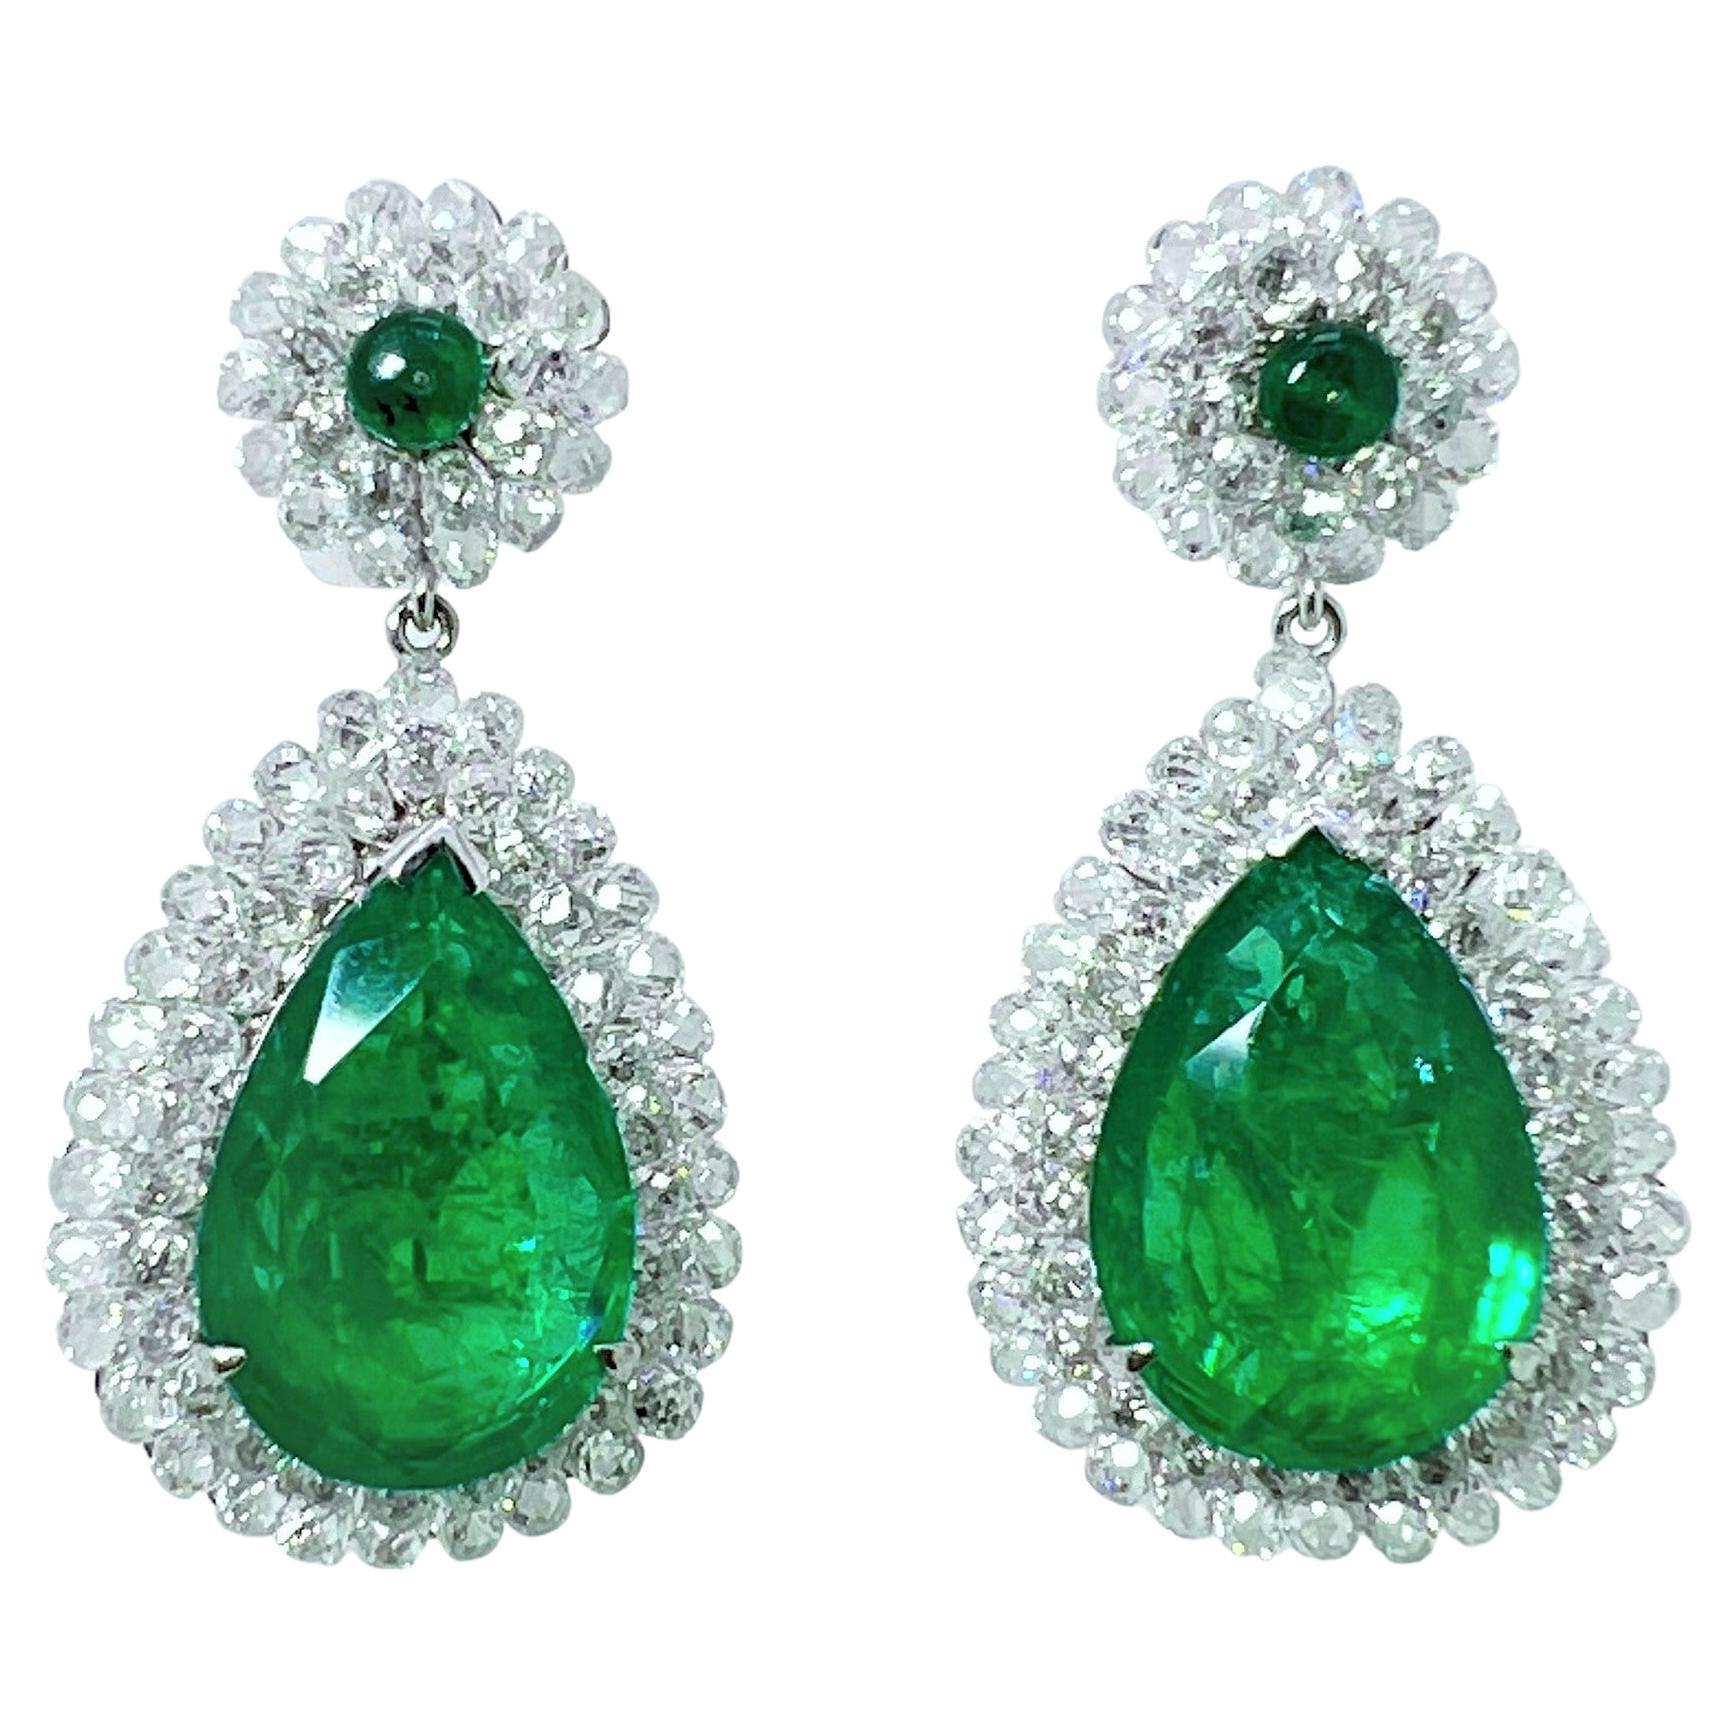 29.48 Carat Emerald and Diamond Earrings Set on 18 Karat White Gold